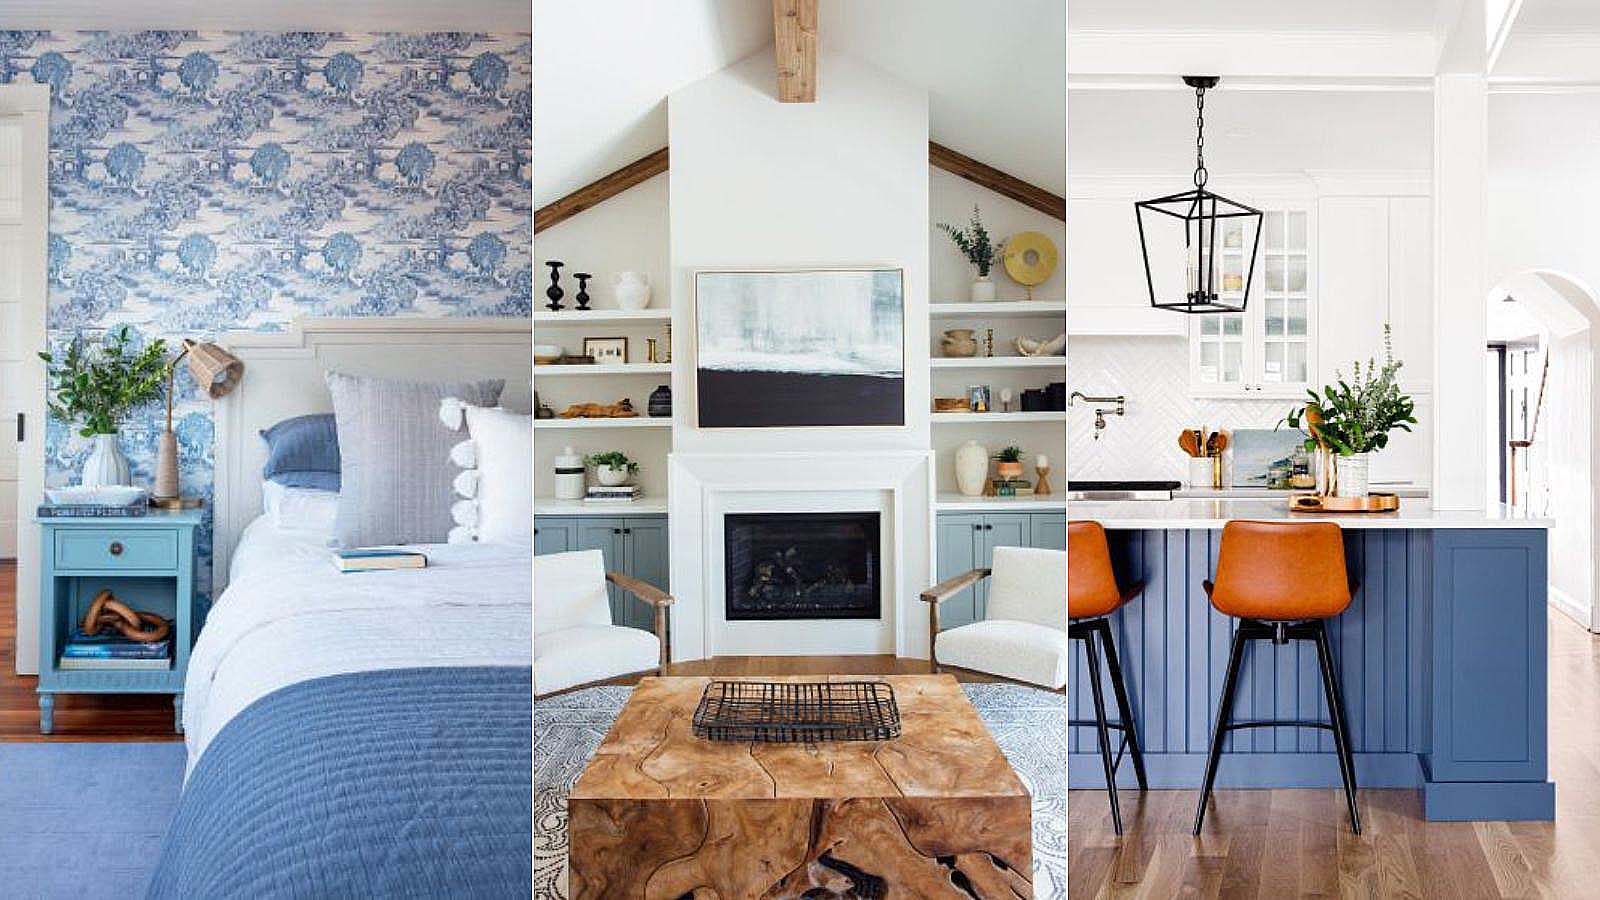 Modern farmhouse ideas: 15 clutter-free, cozy interiors